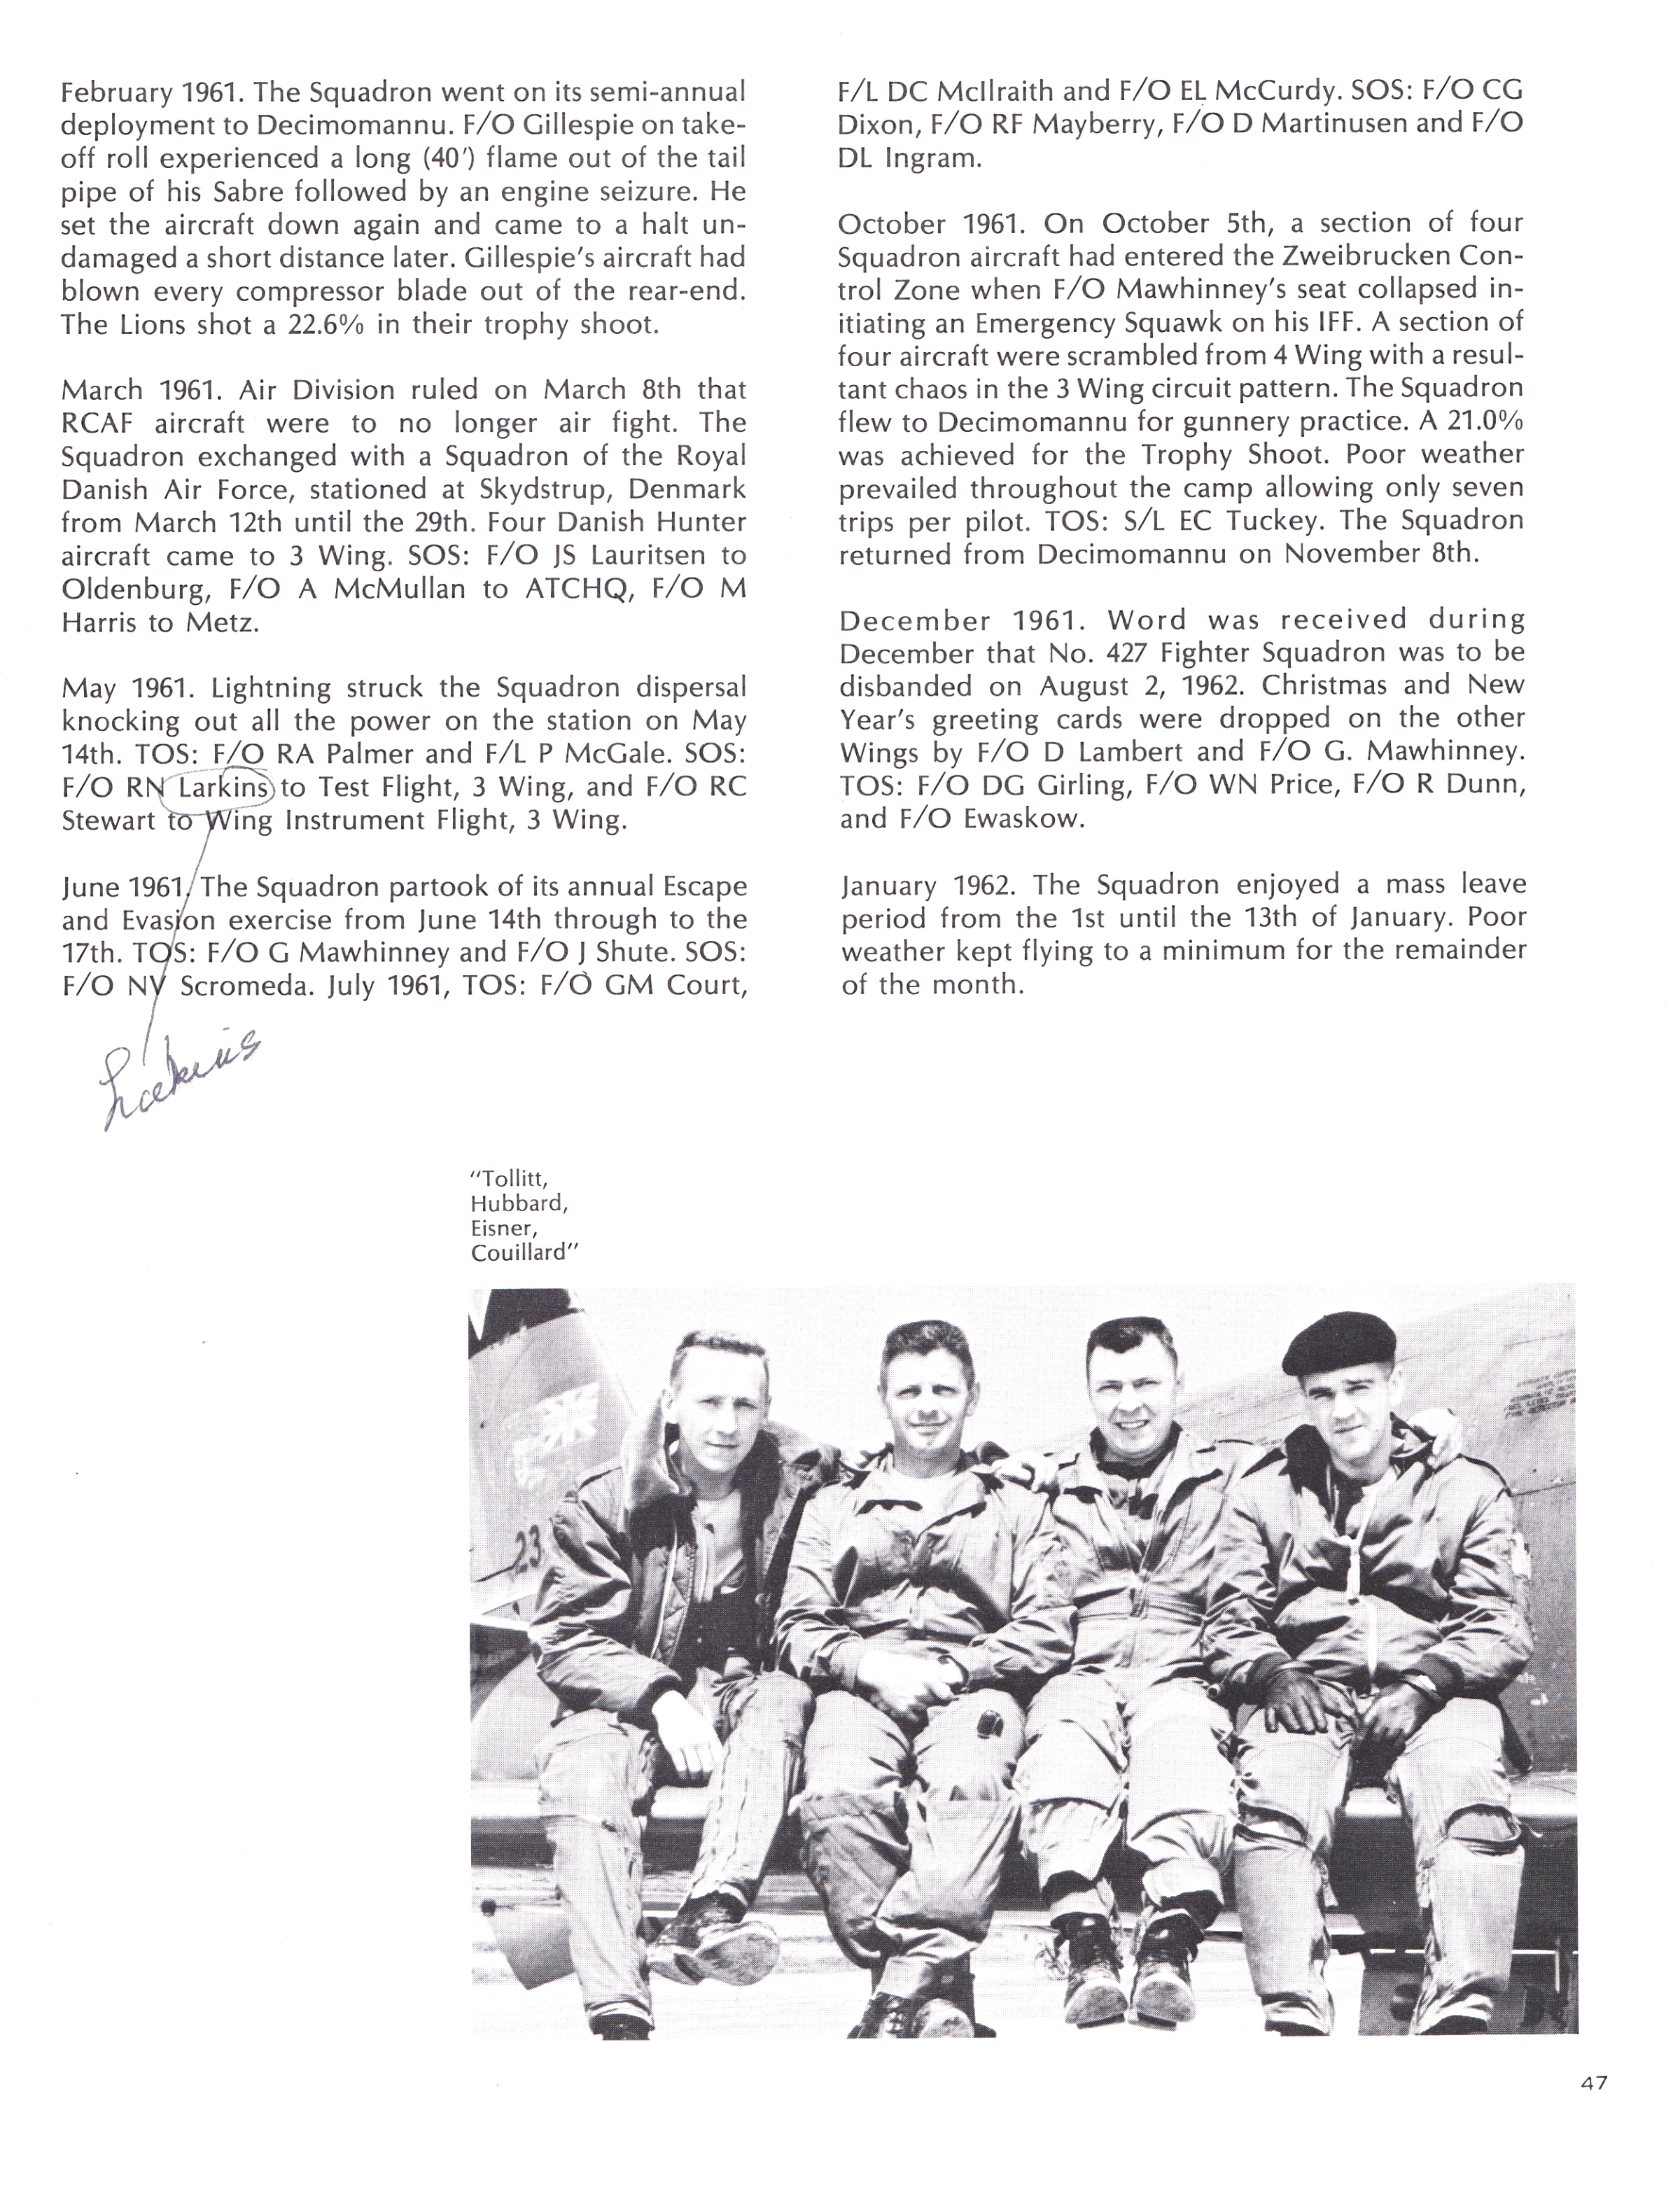 Squadron Sabre diary 1957-1962